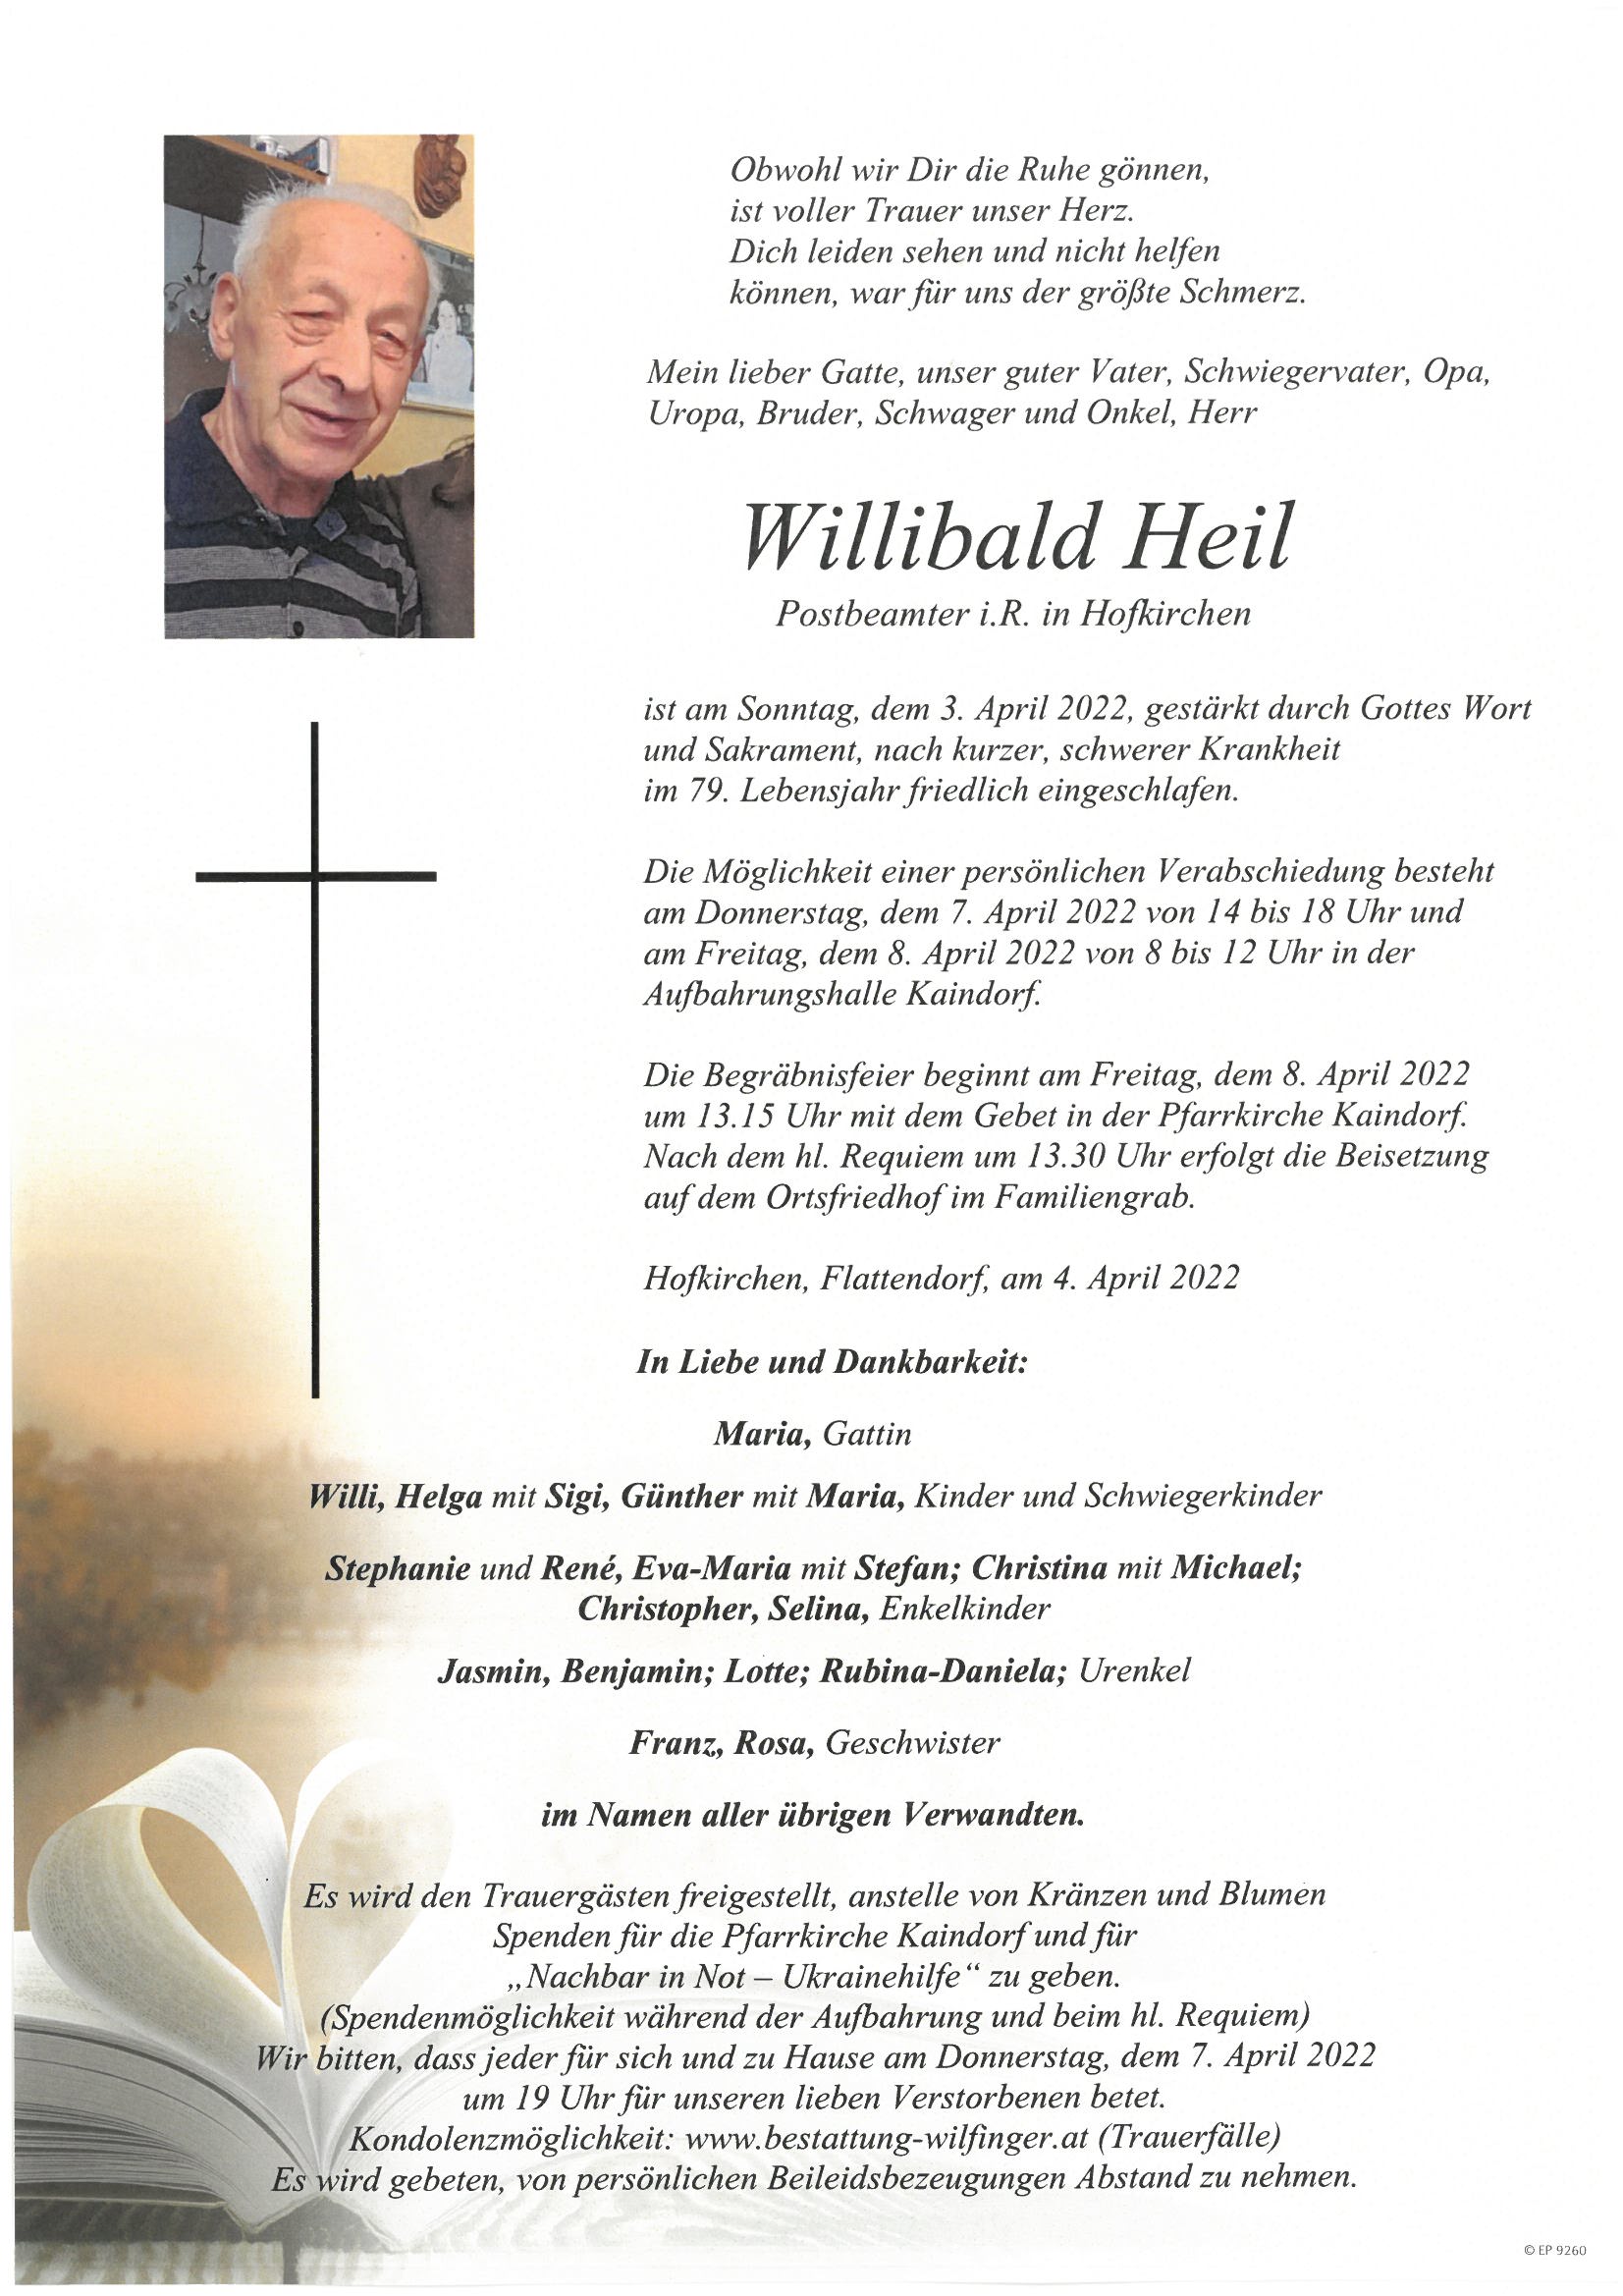 Willibald Heil, Hofkirchen